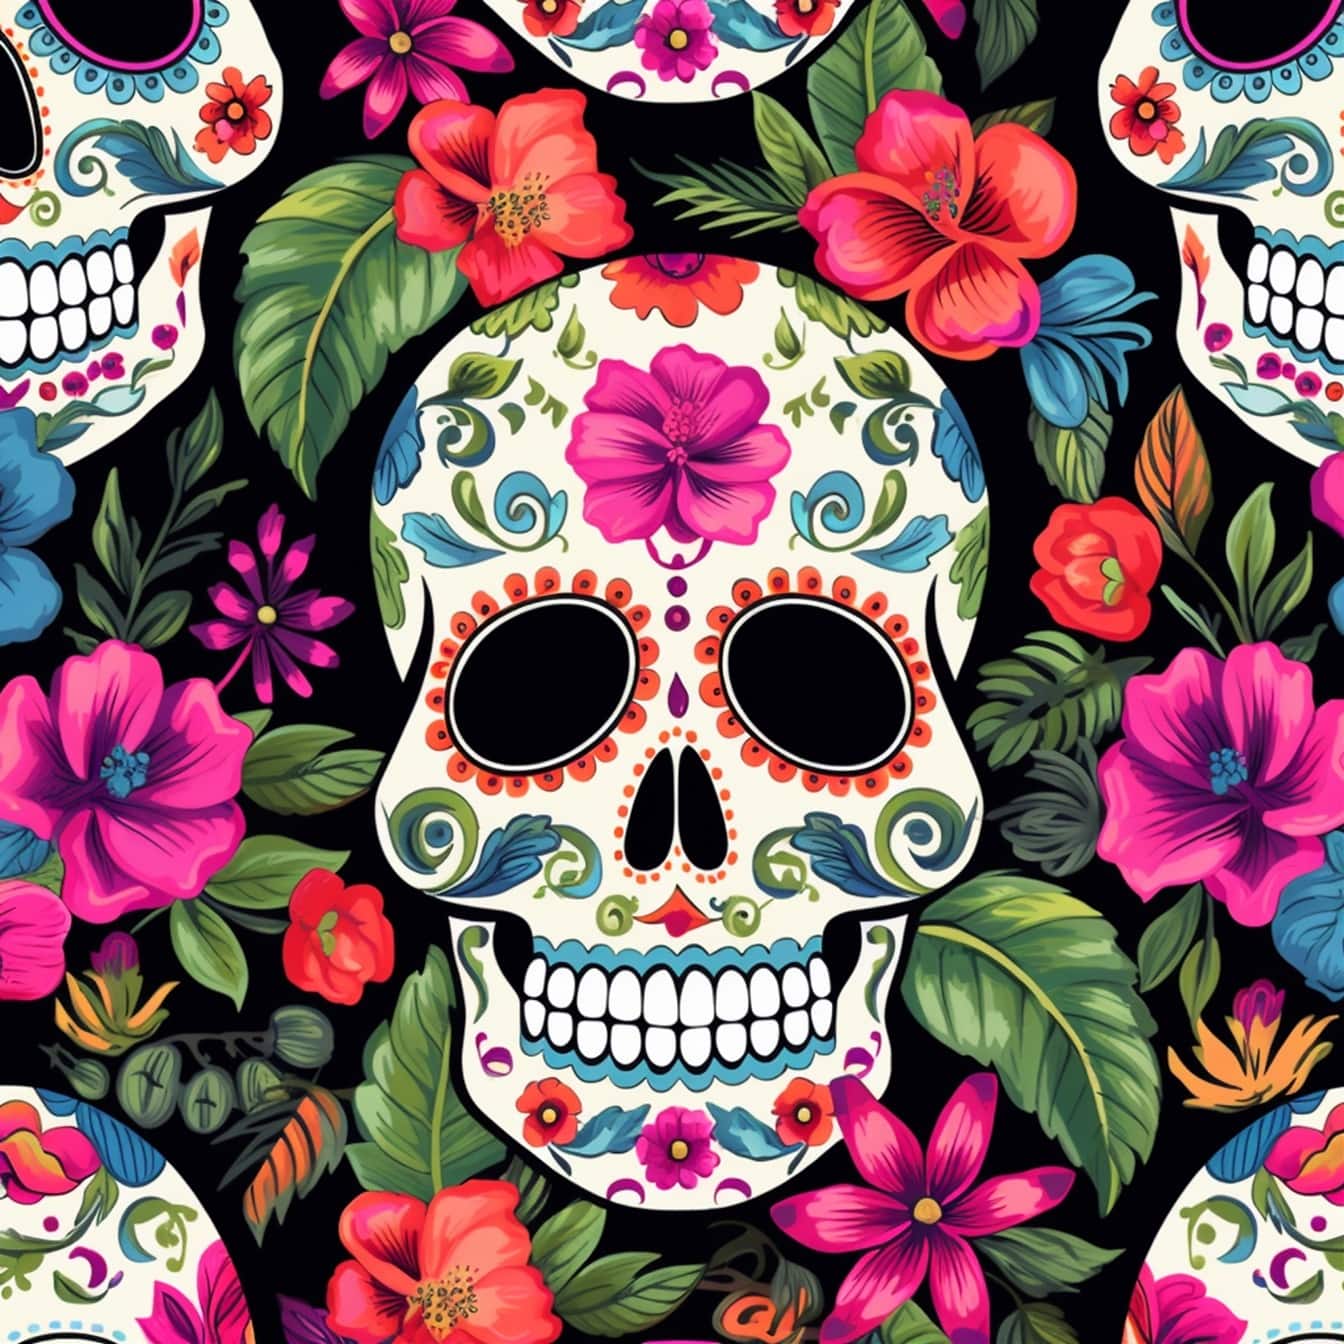 Colorful vintage illustration of skull in flowers